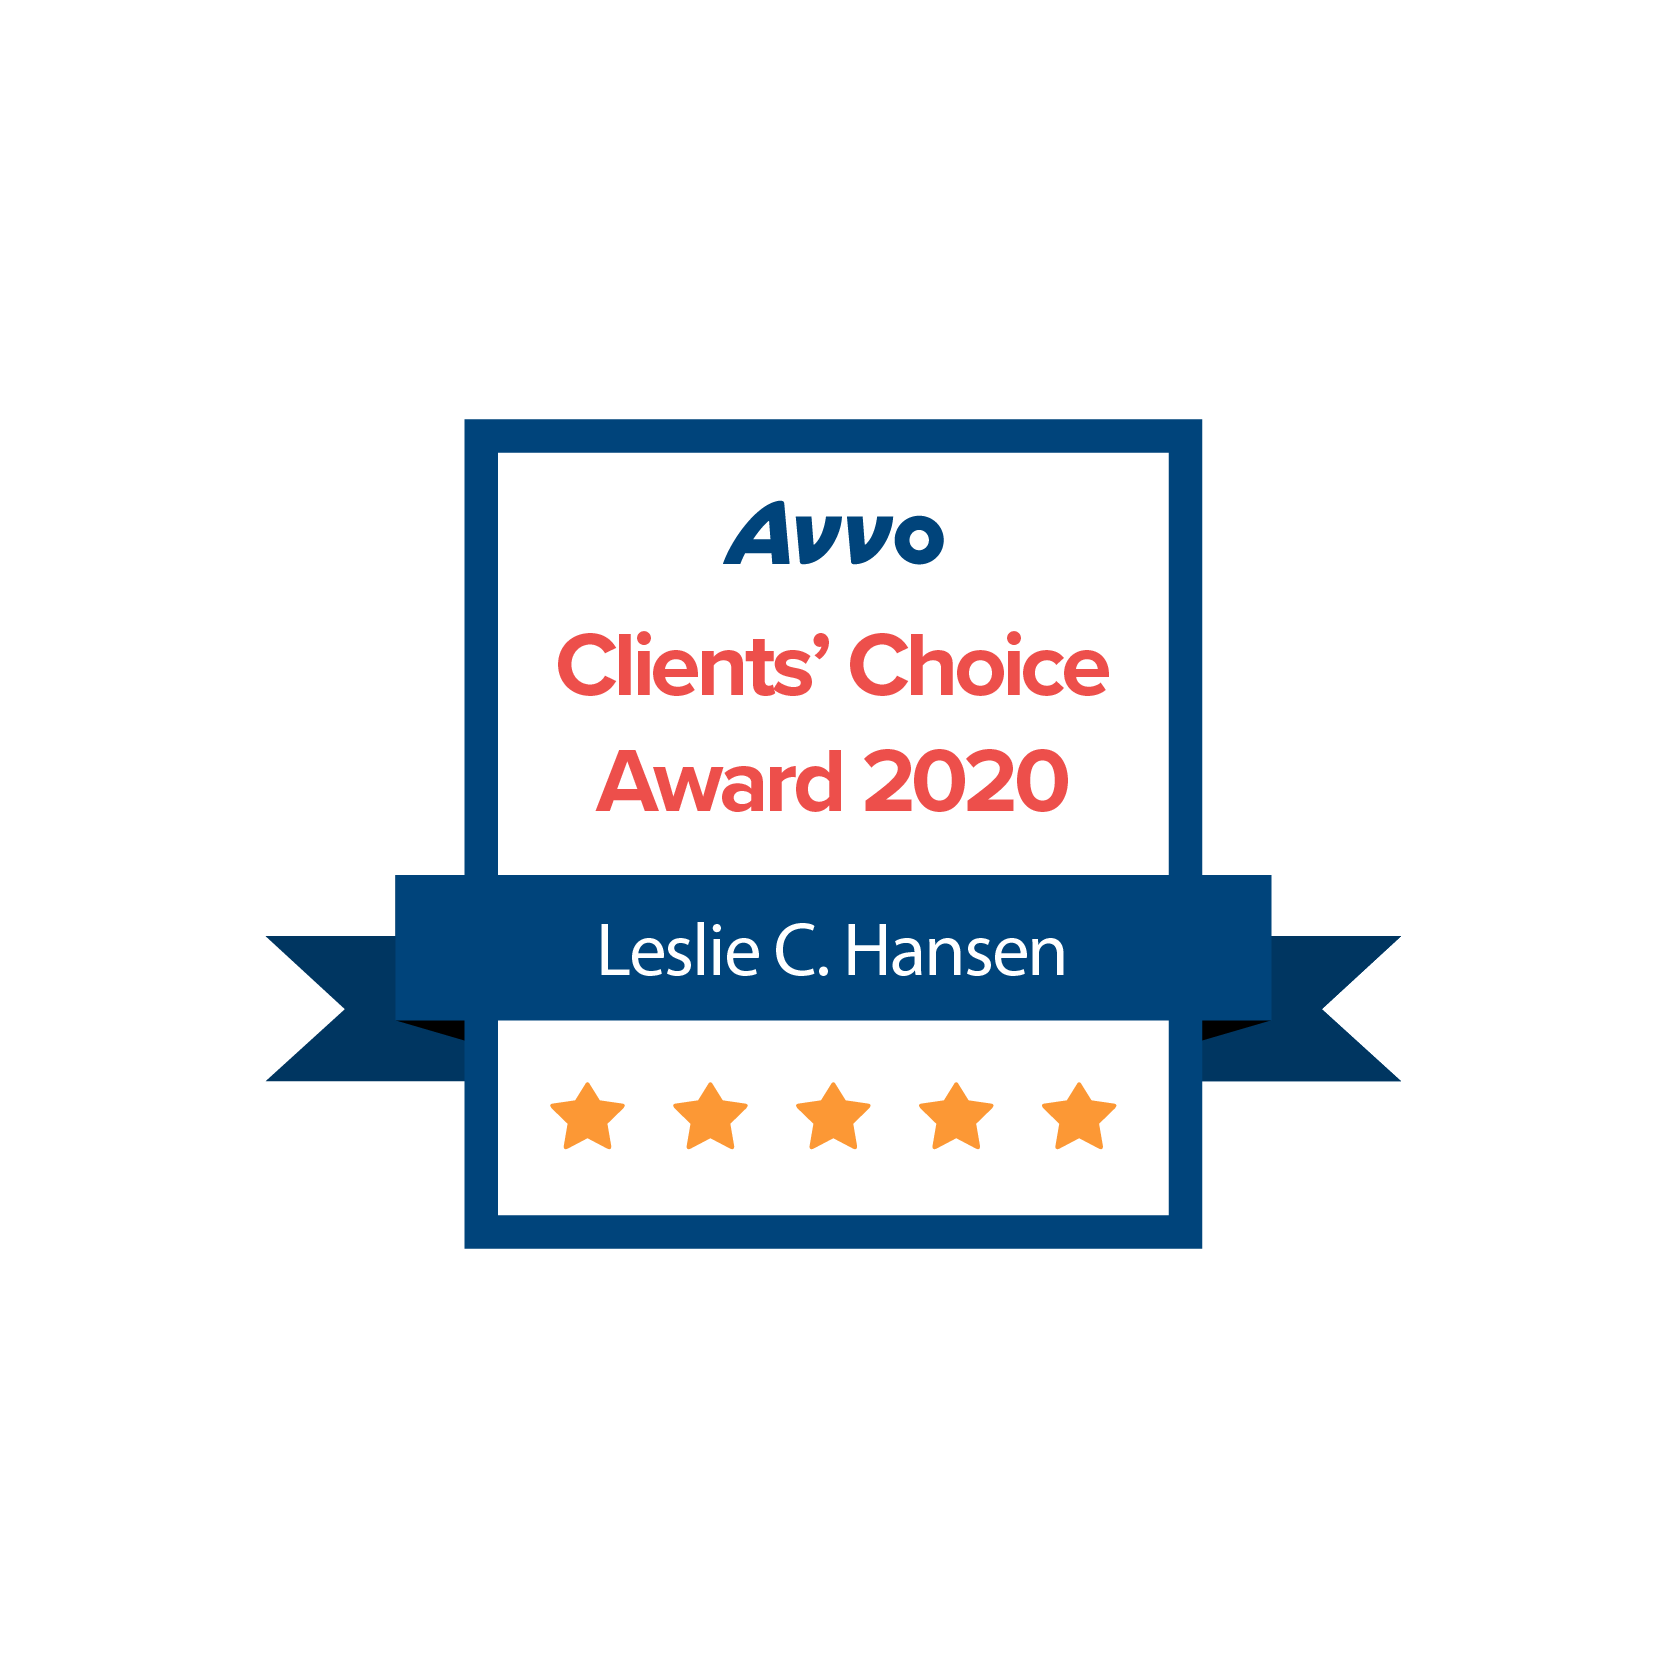 Avvo Clients’ Choice – Leslie Hansen